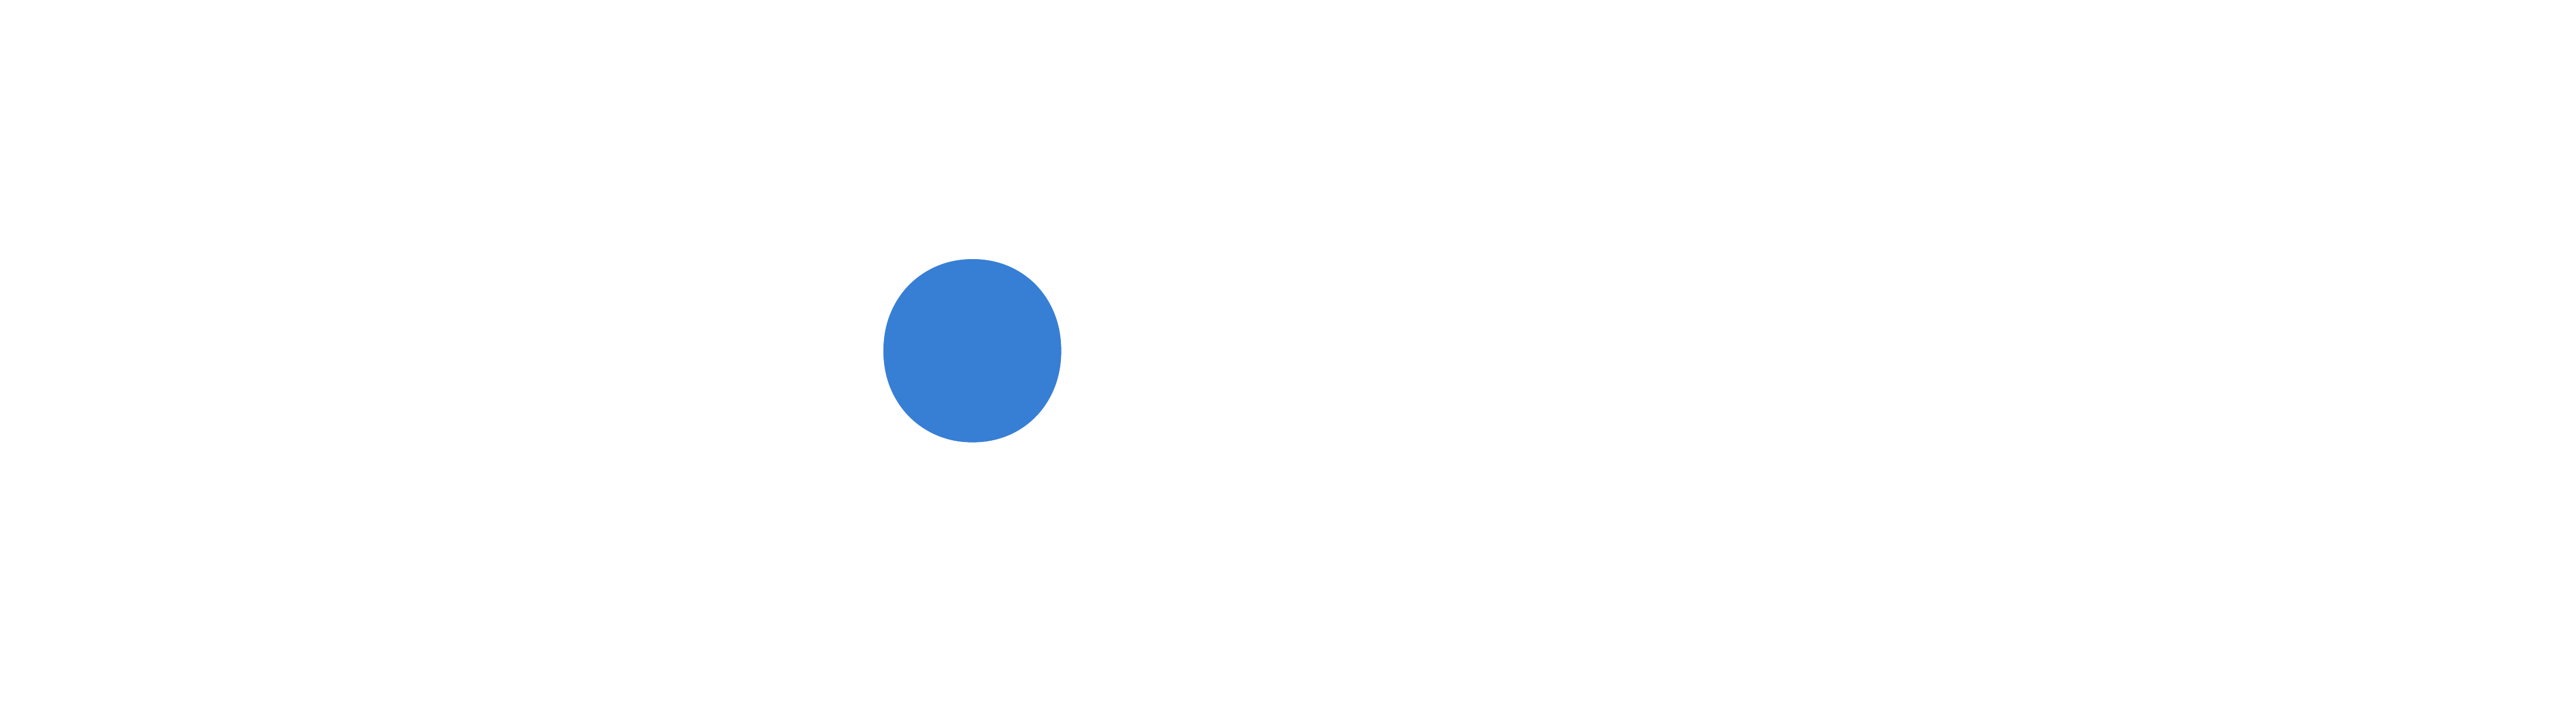 sofwave logo